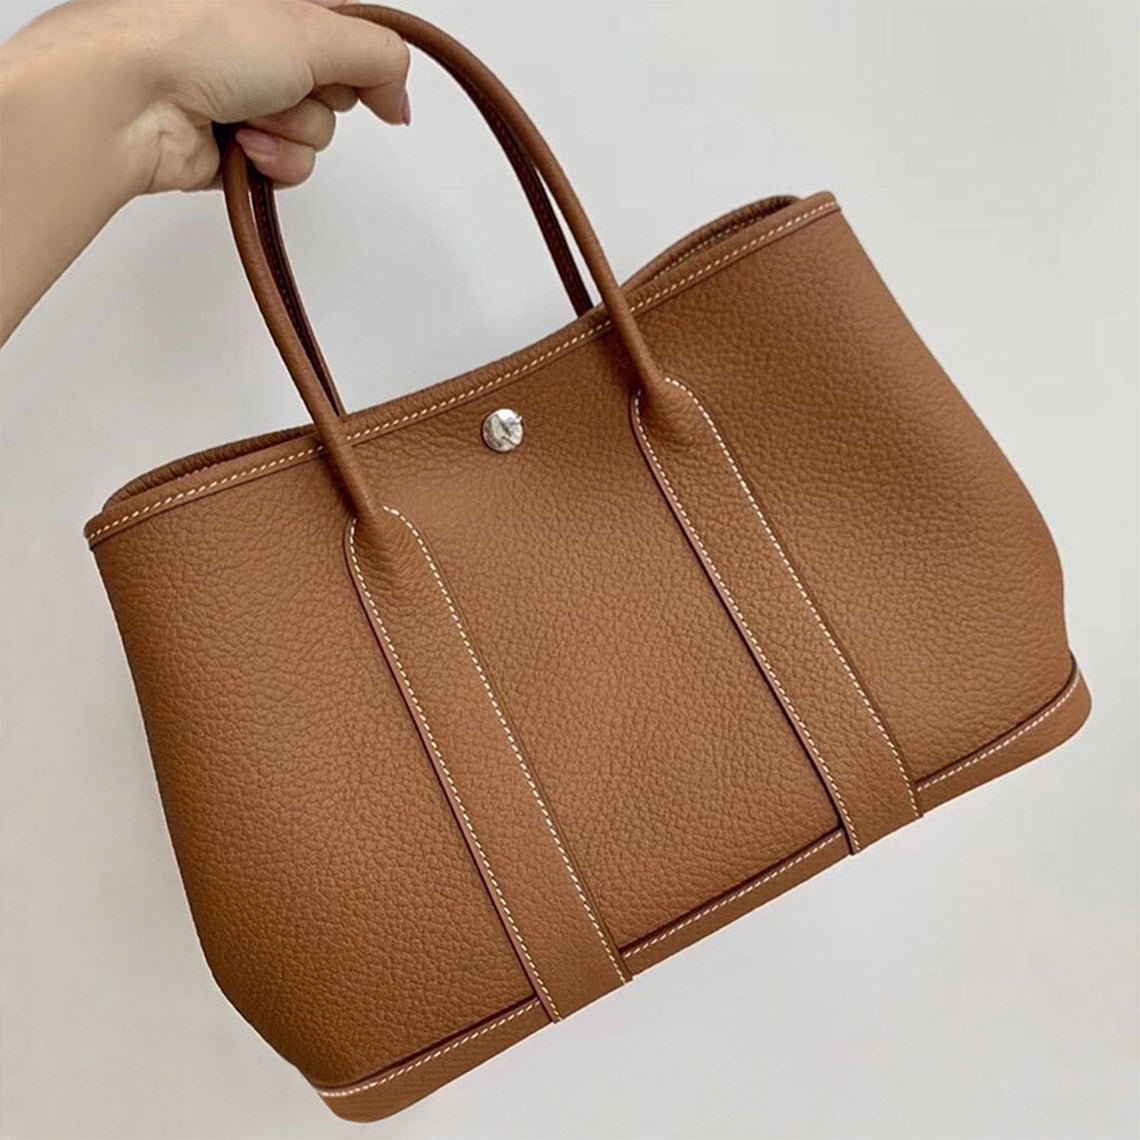 Real Genuine Leather Handbags | Brown Leather Handbag - POPSEWING™